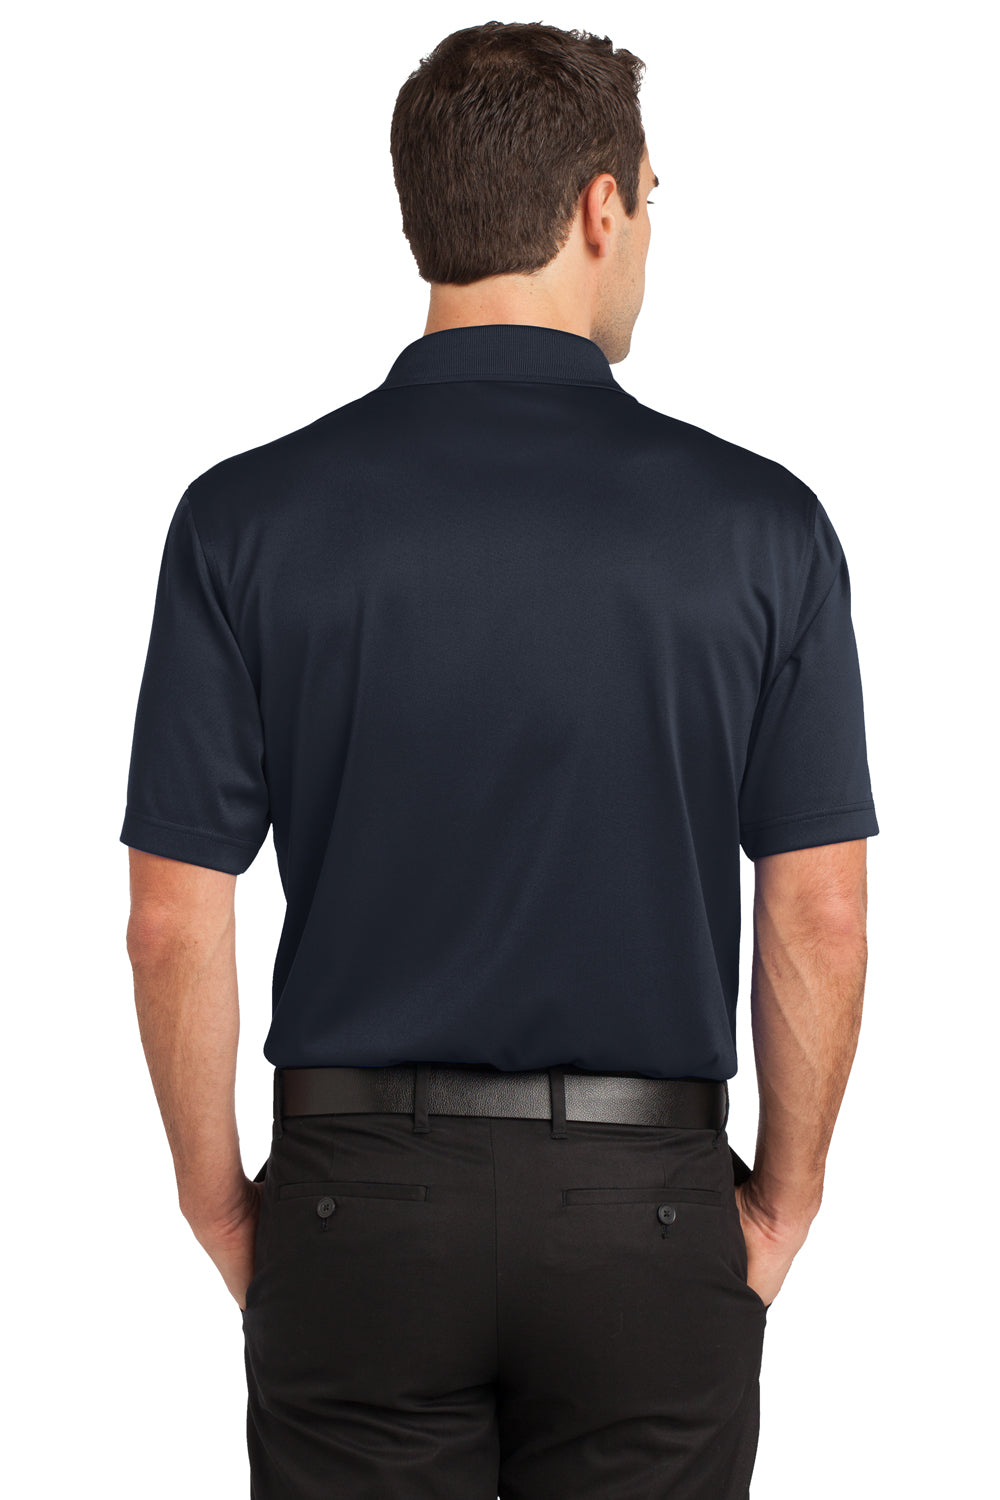 CornerStone CS412P Mens Select Moisture Wicking Short Sleeve Polo Shirt w/ Pocket Navy Blue Back